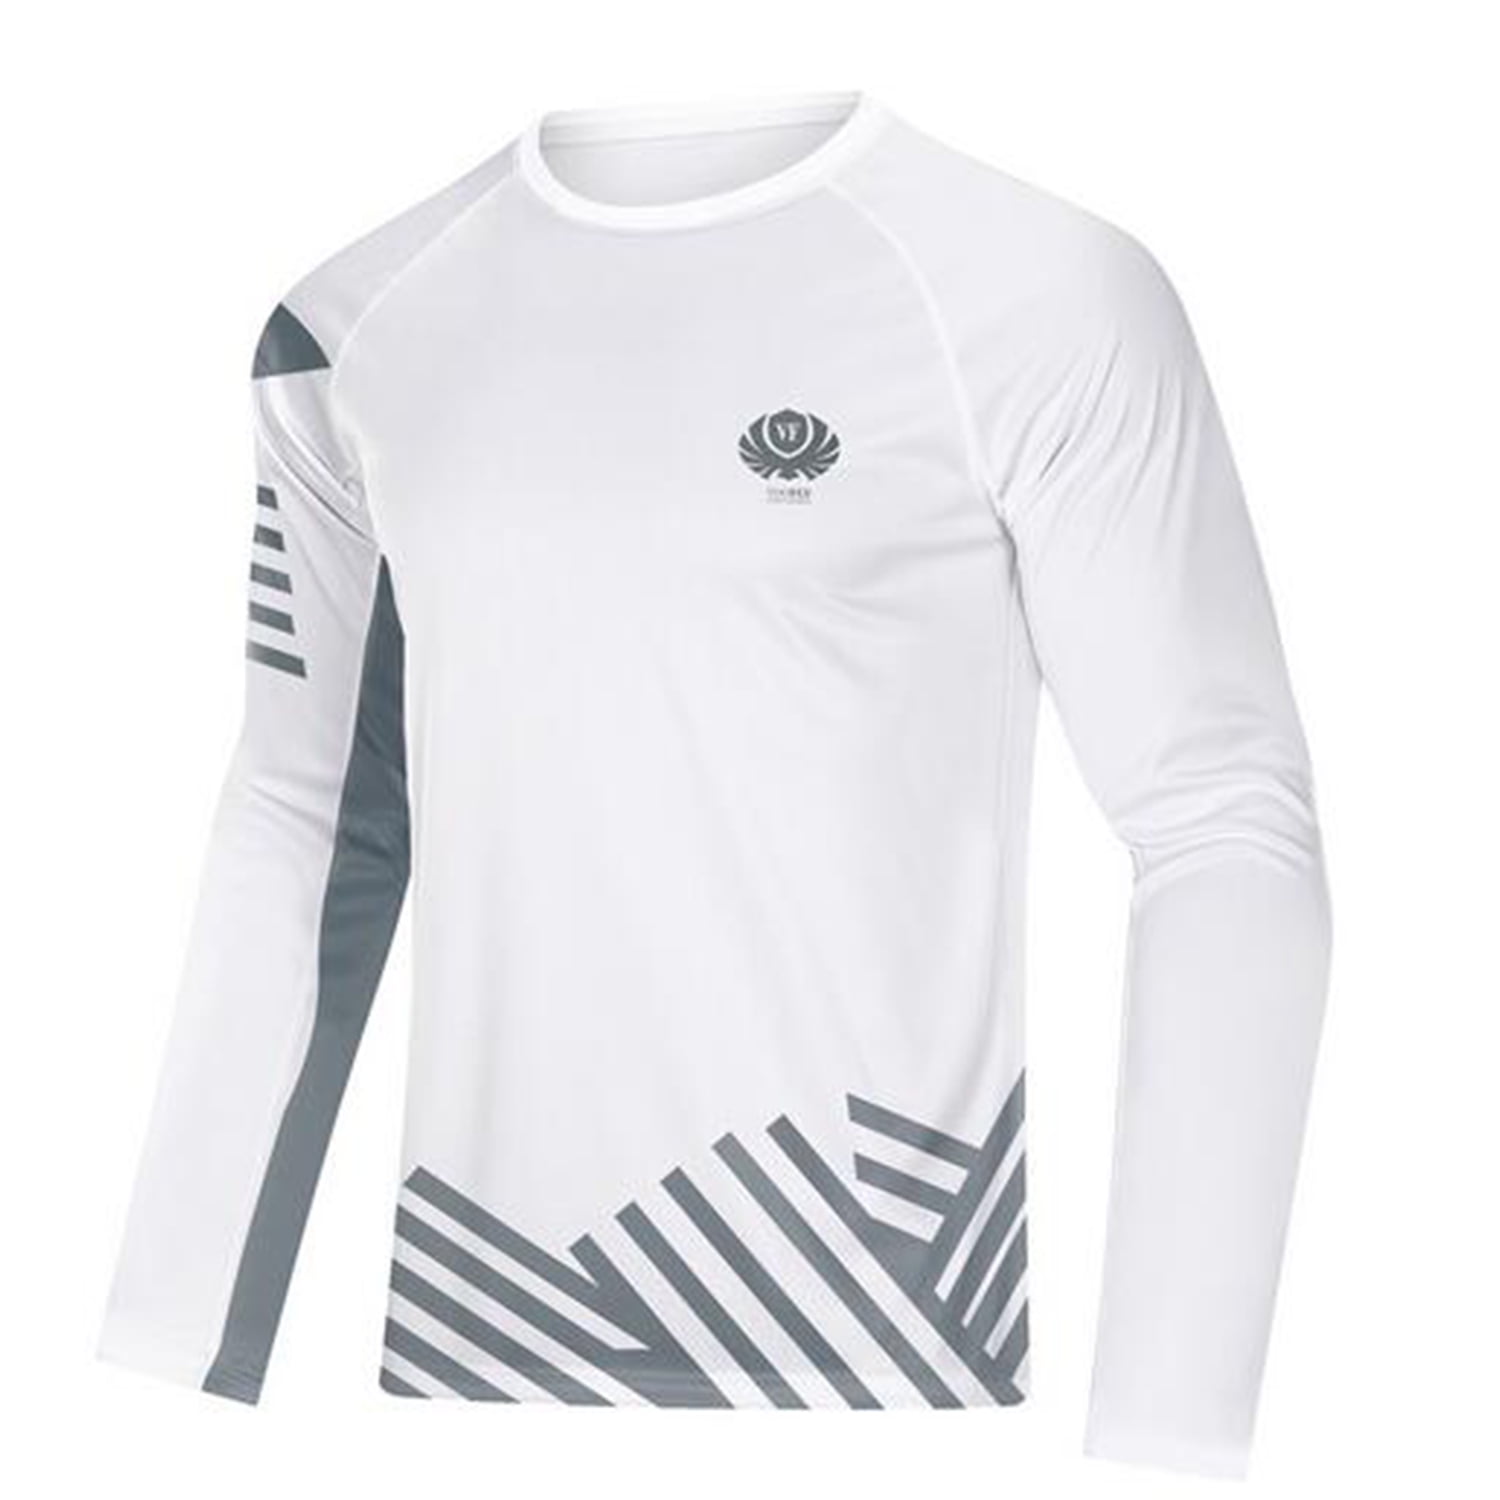 Voofly UV Shirts for Men Long Sleeve UPF 50+ Outdoor Sun Shirt Lightweight  Moisture Wicking White M